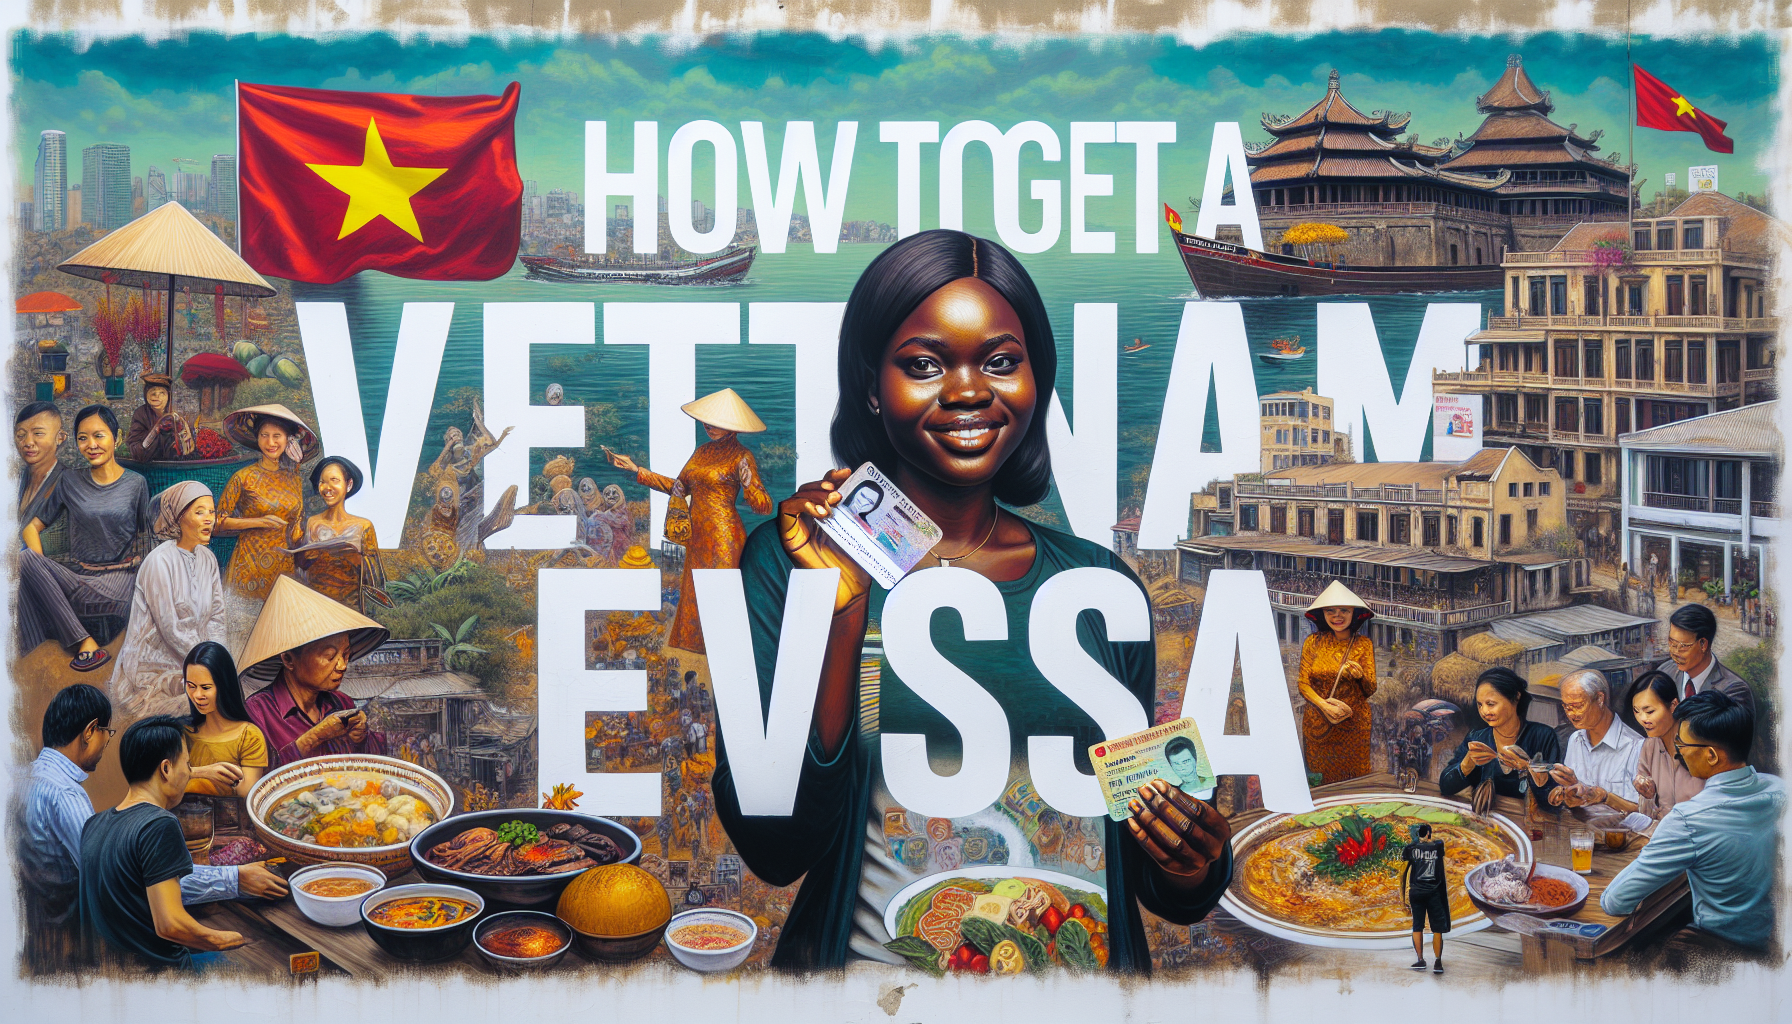 Vietnam Evisa for Citizens from Brazzaville